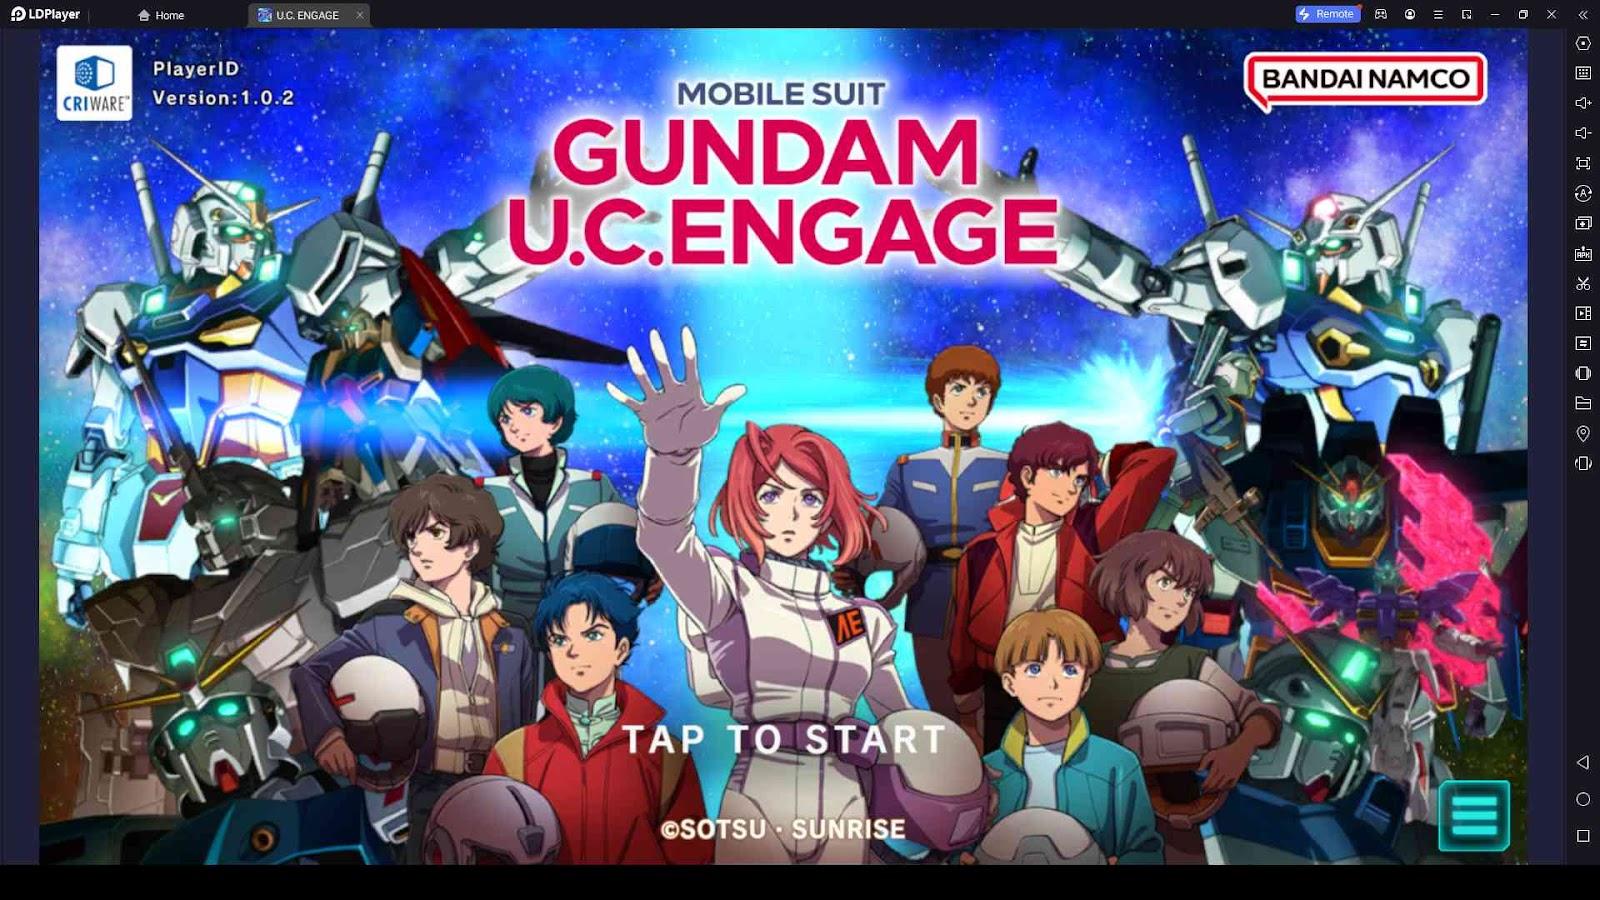 Mobile Suit Gundam U.C. Engage Beginner Guide